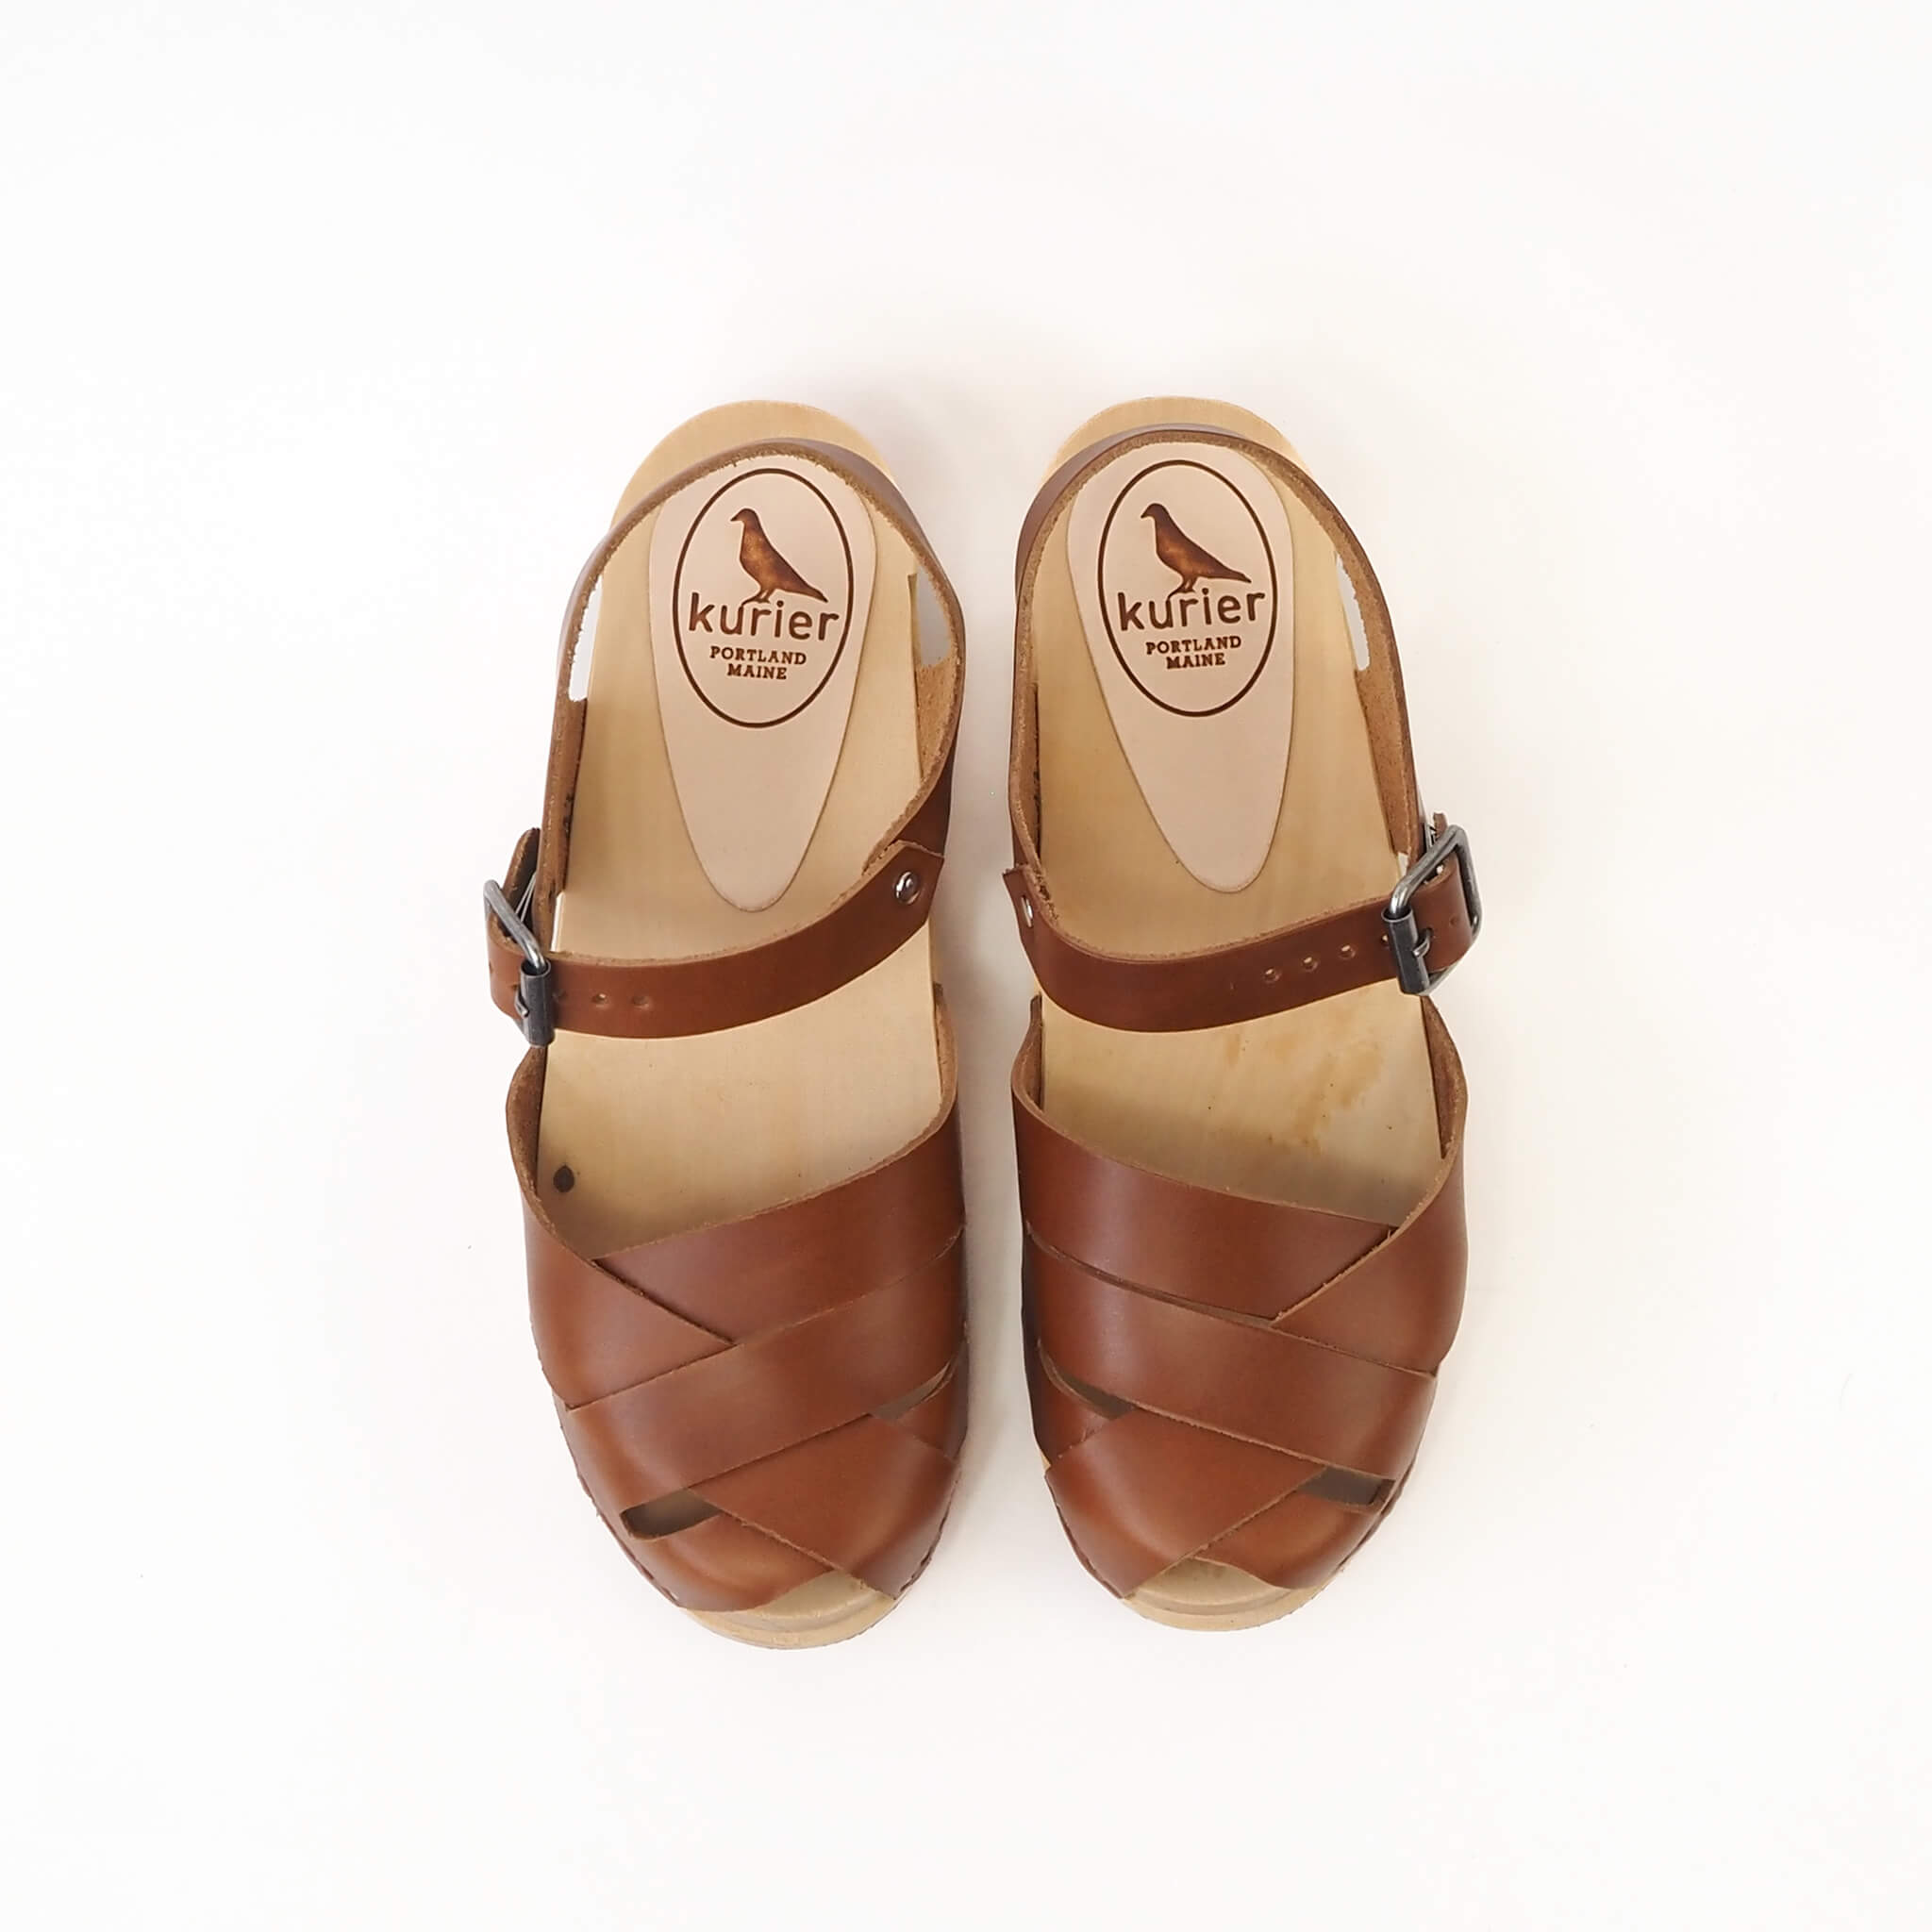 emelia clog low heel peep toe mary janesandal handmade american leather wood - pecan top view